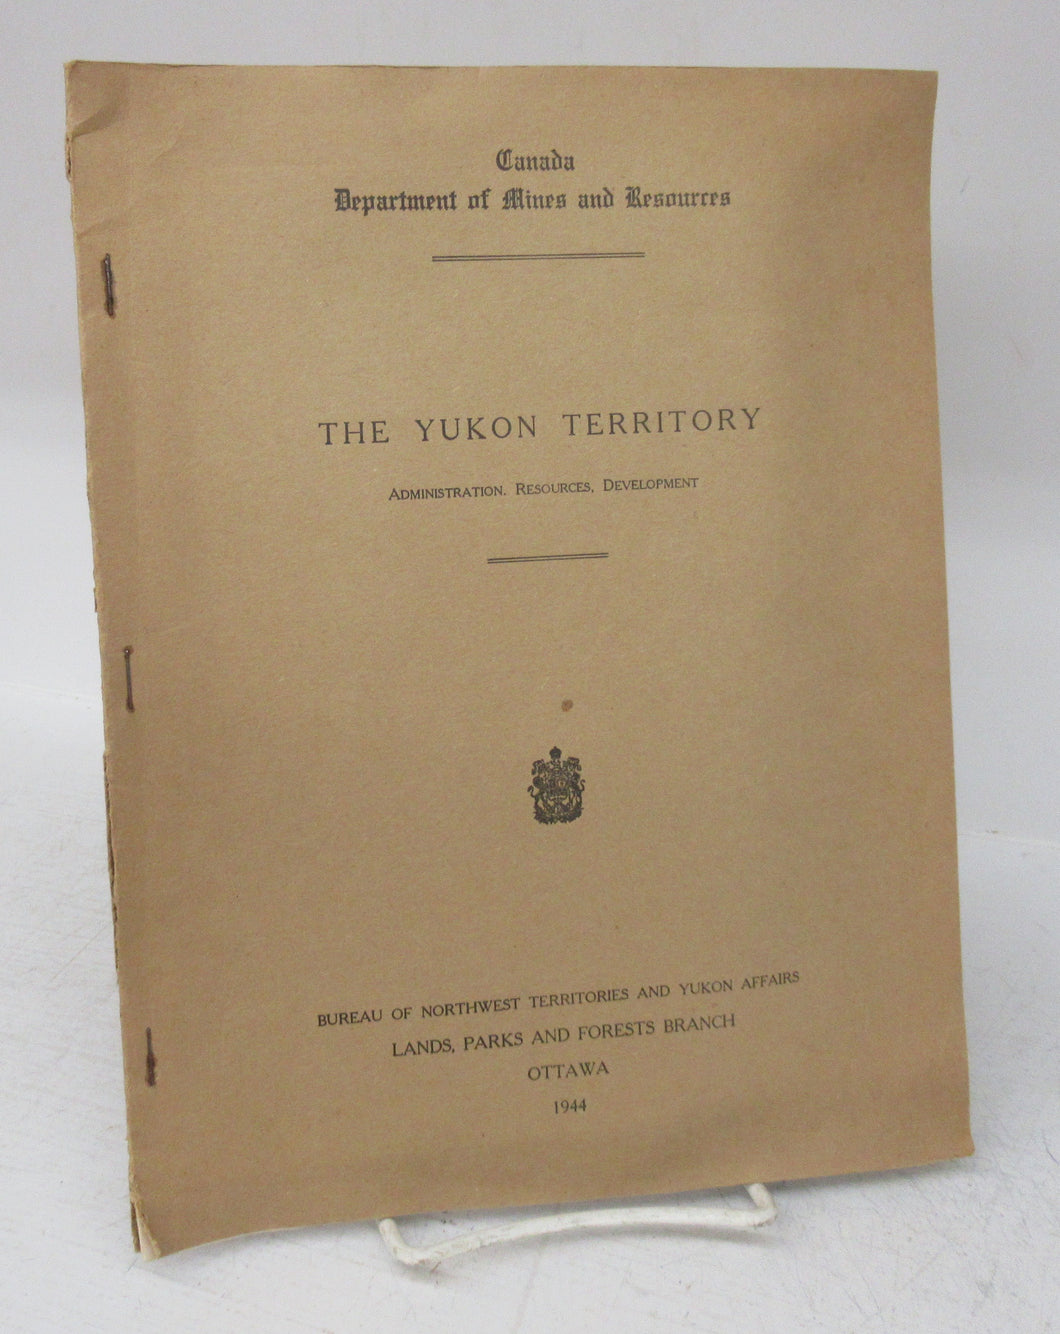 The Yukon Territory: Administration, Resources, Development